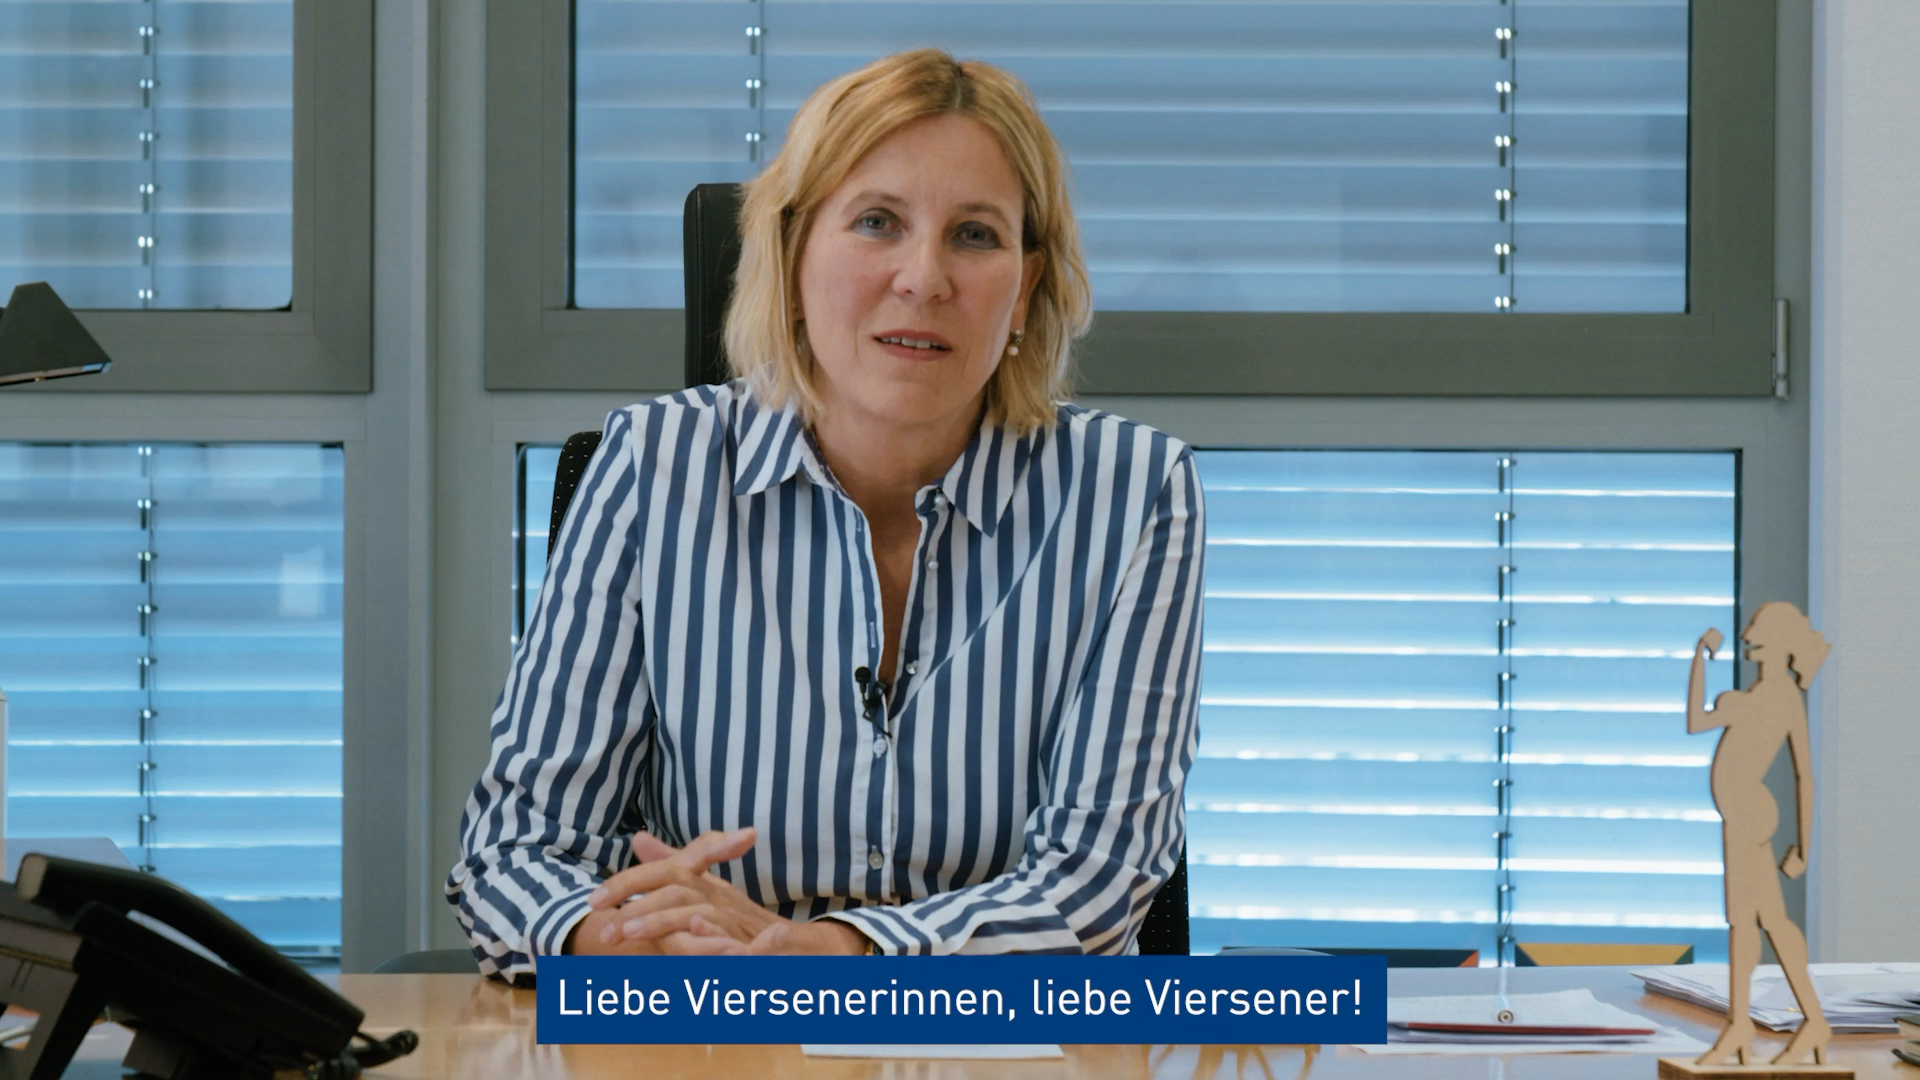 Bürgermeisterin Sabine Anemüller bei ihrer Videobotschaft am 17. April 2020